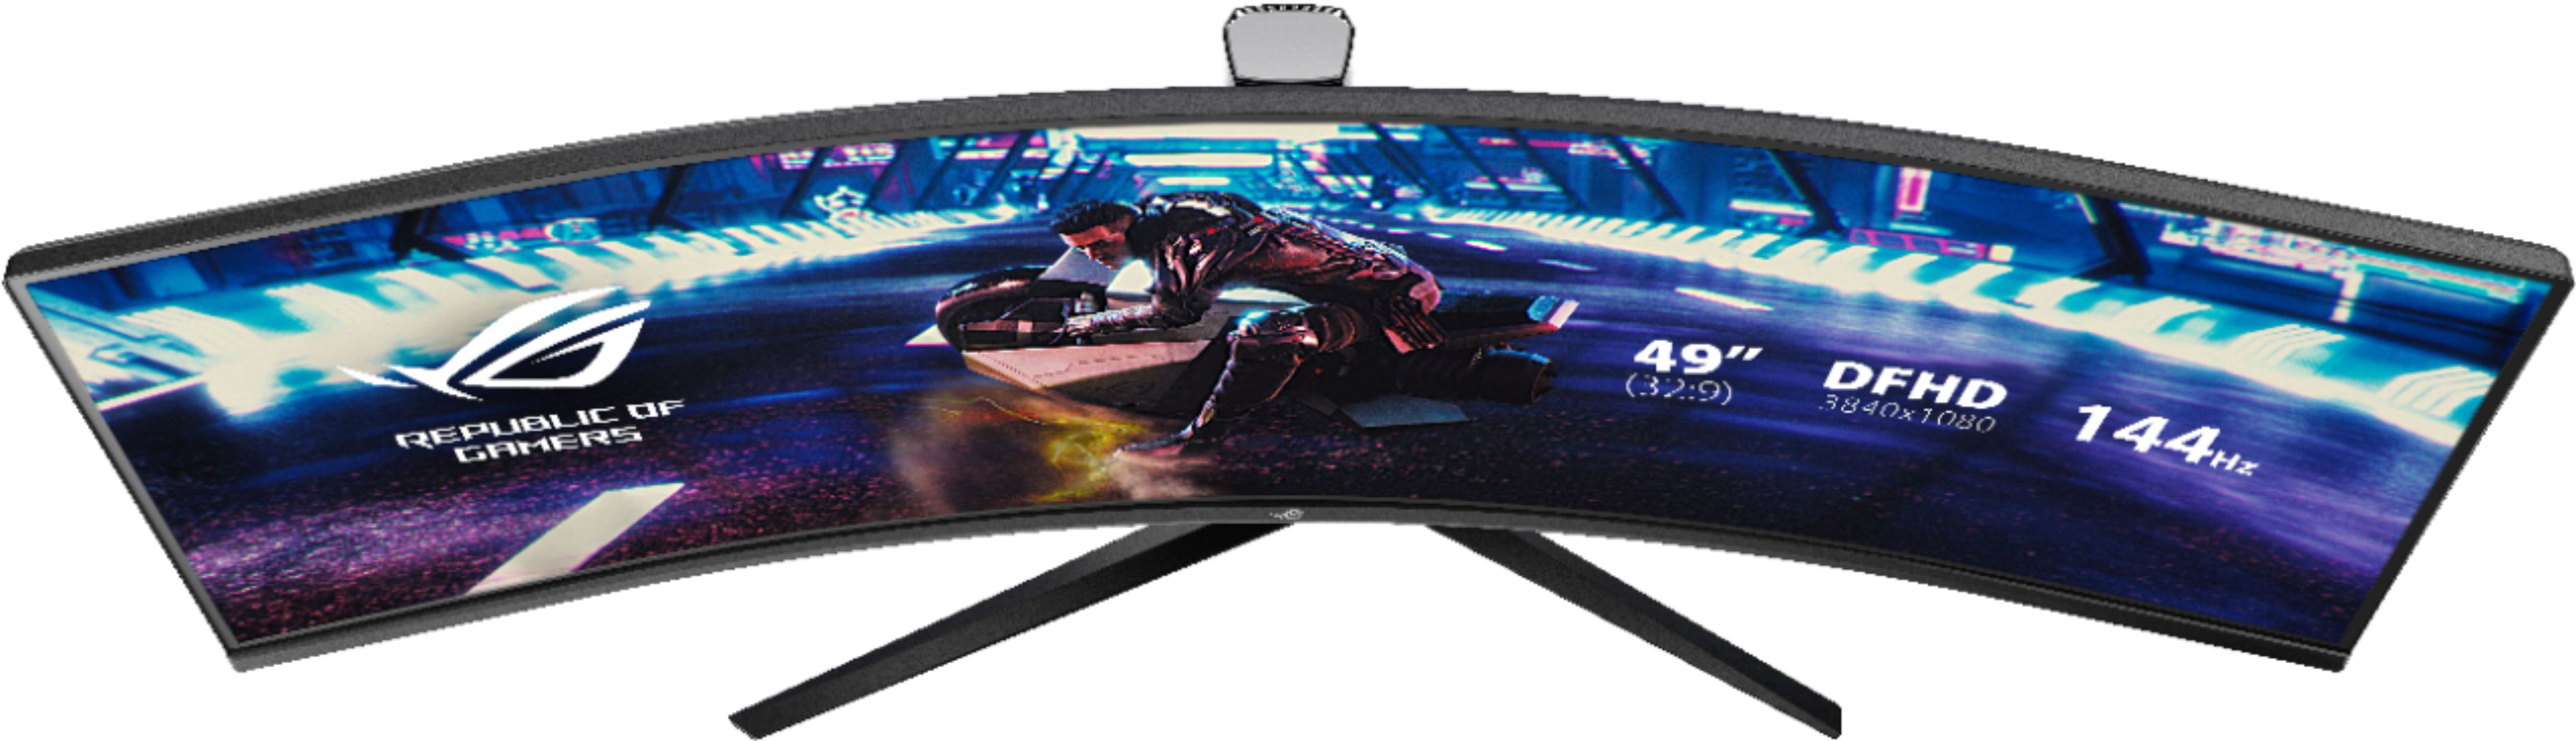 Best Buy: ASUS ROG Strix with HDR 49” Gaming 144Hz FHD (DisplayPort,HDMI,USB) Curved XG49VQ Monitor FreeSync Black